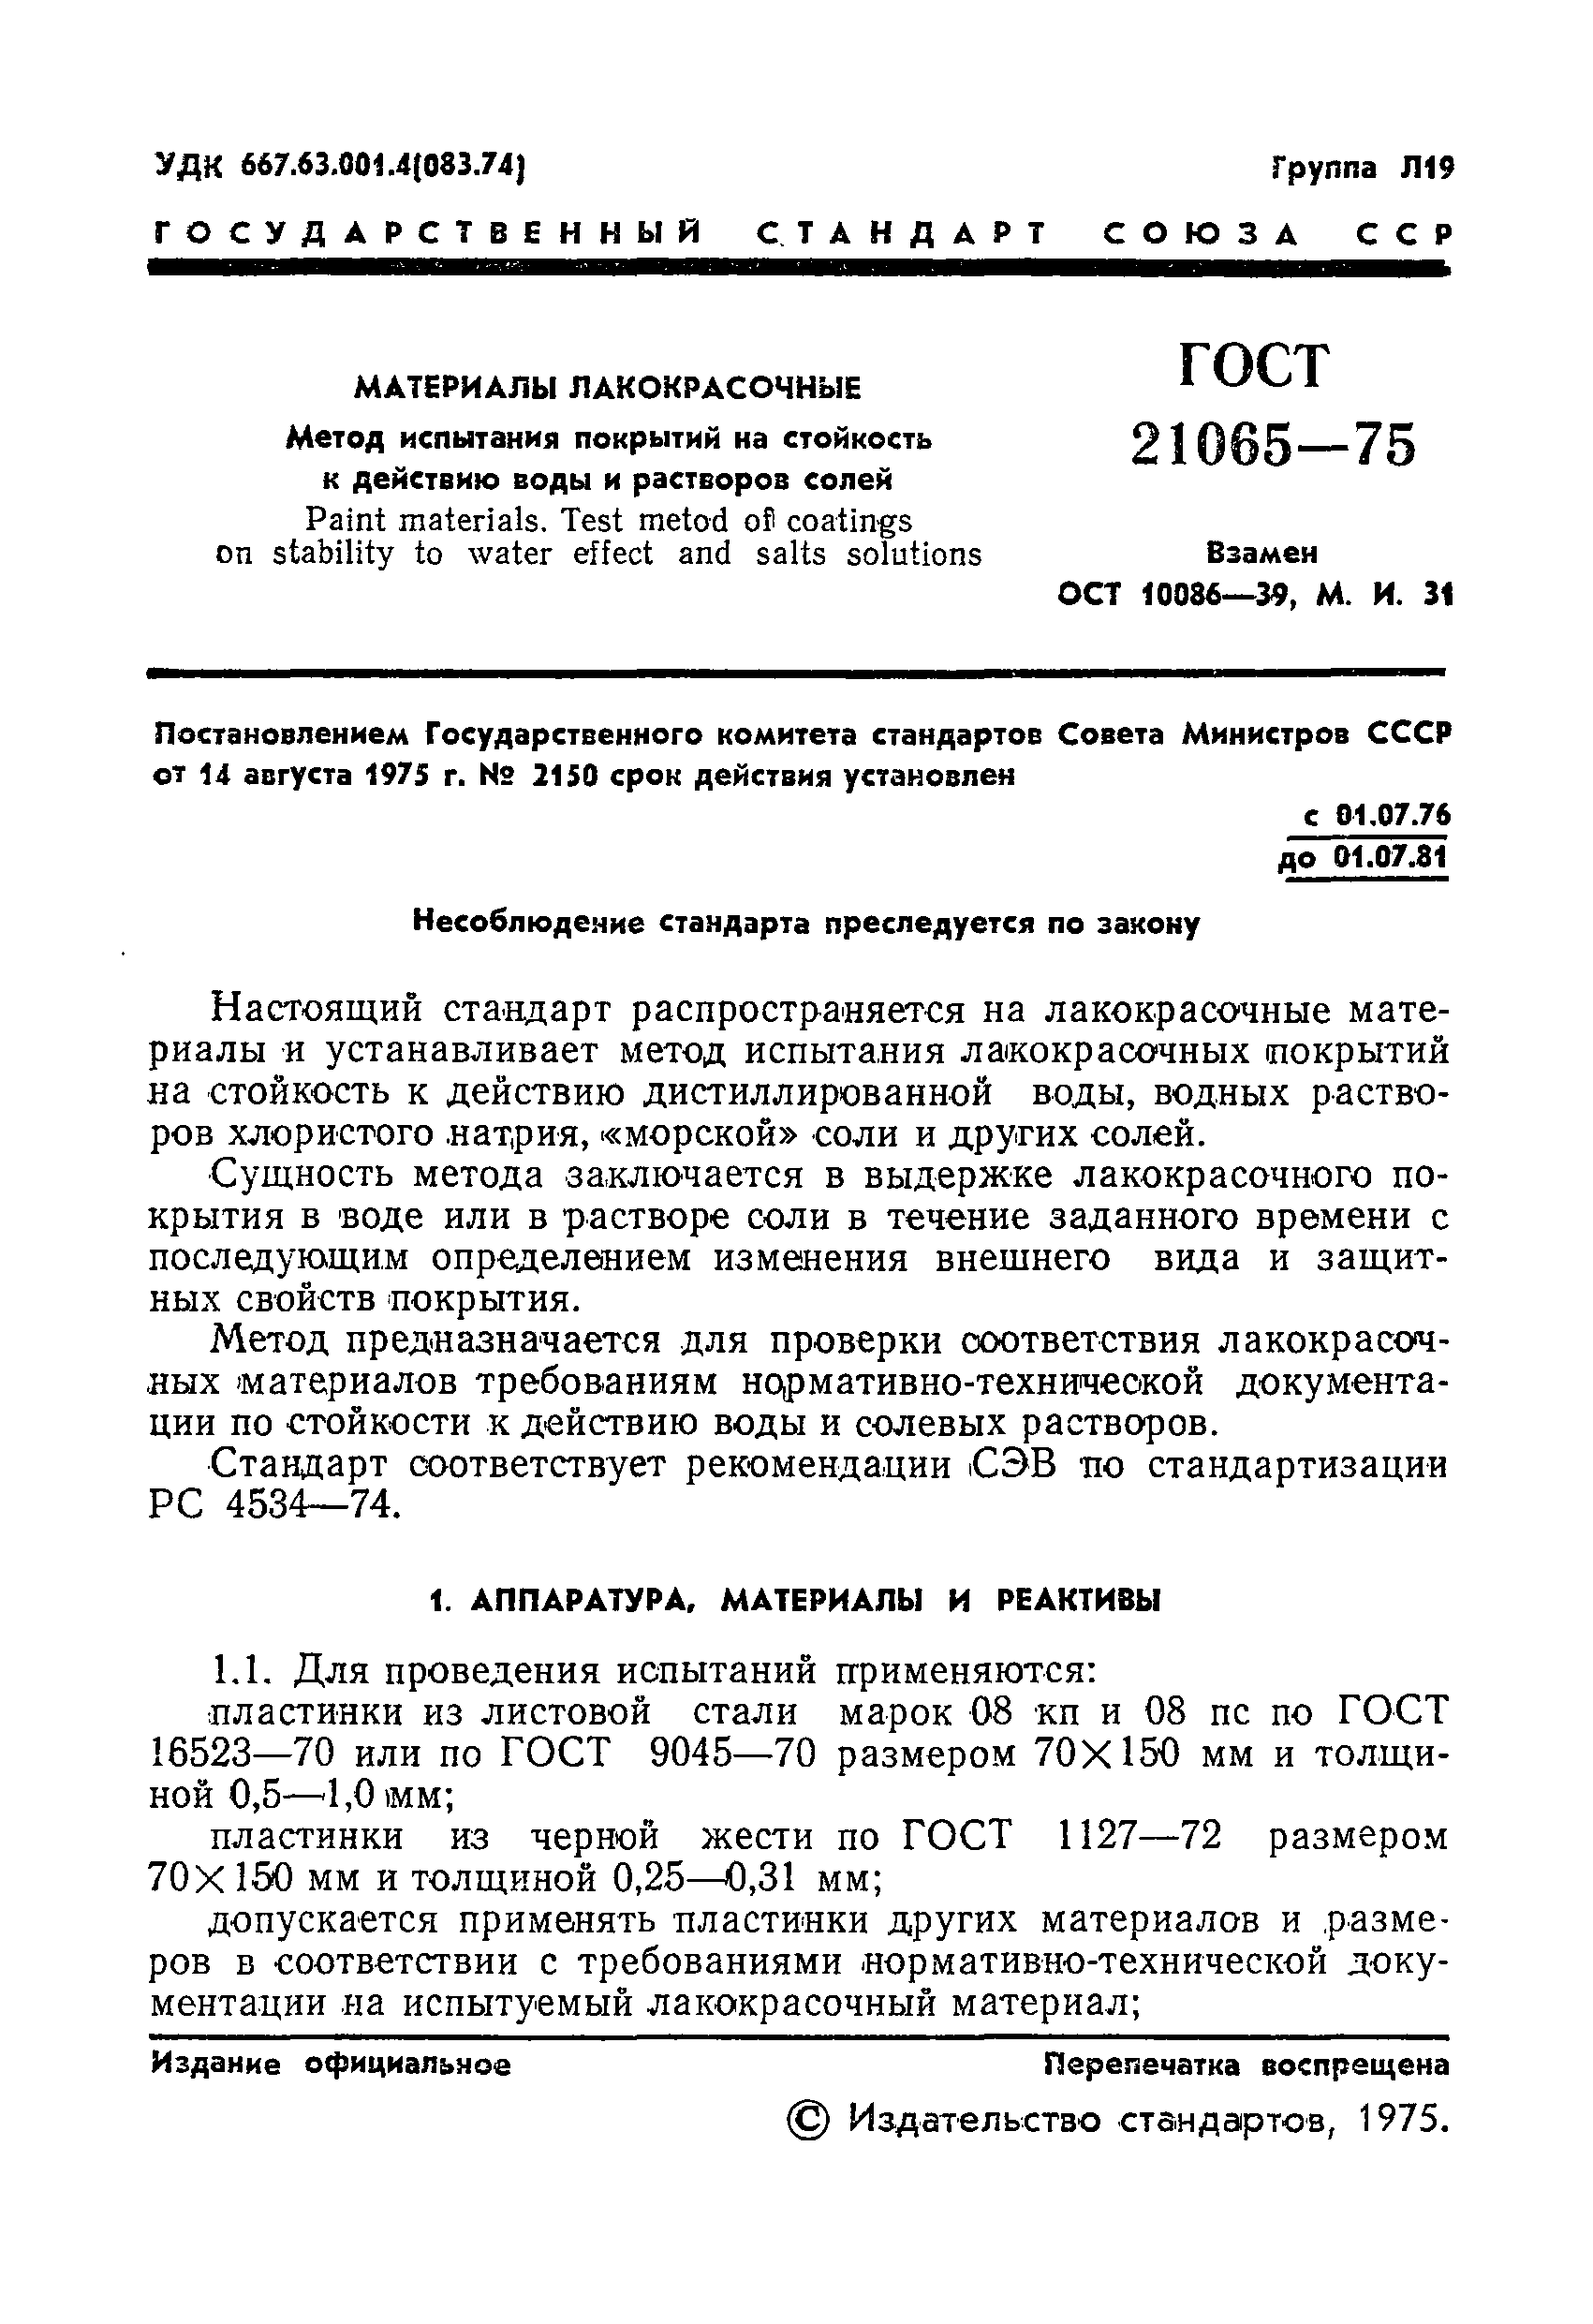 ГОСТ 21065-75